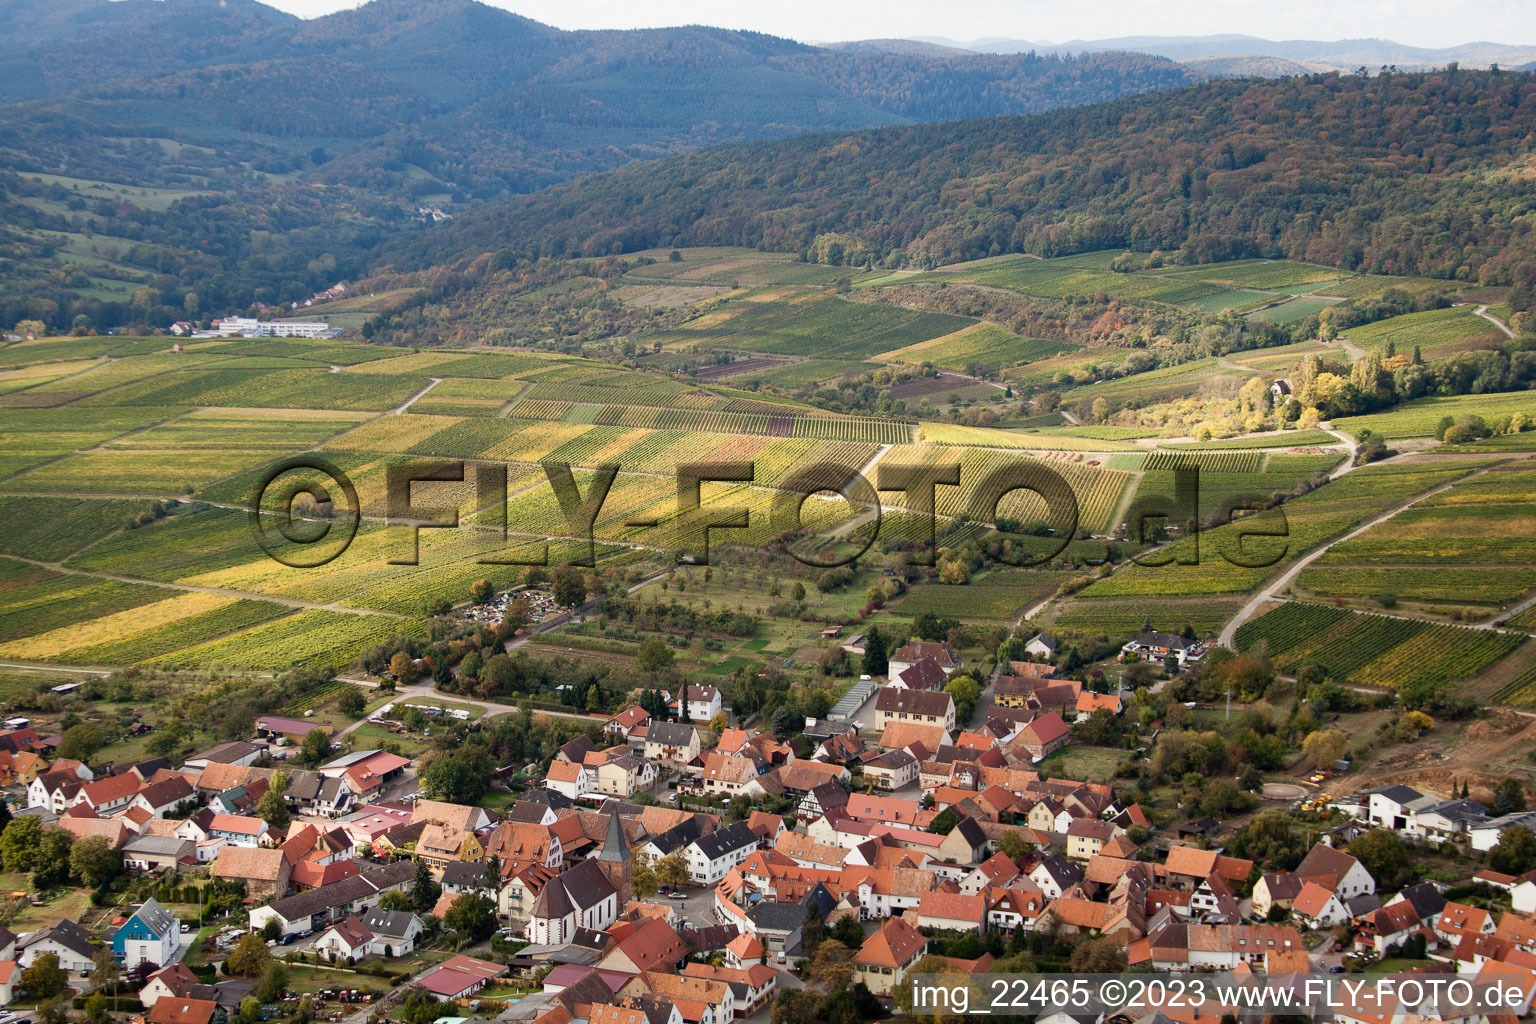 Aerial view of Silence, Sonnenberg in the district Rechtenbach in Schweigen-Rechtenbach in the state Rhineland-Palatinate, Germany